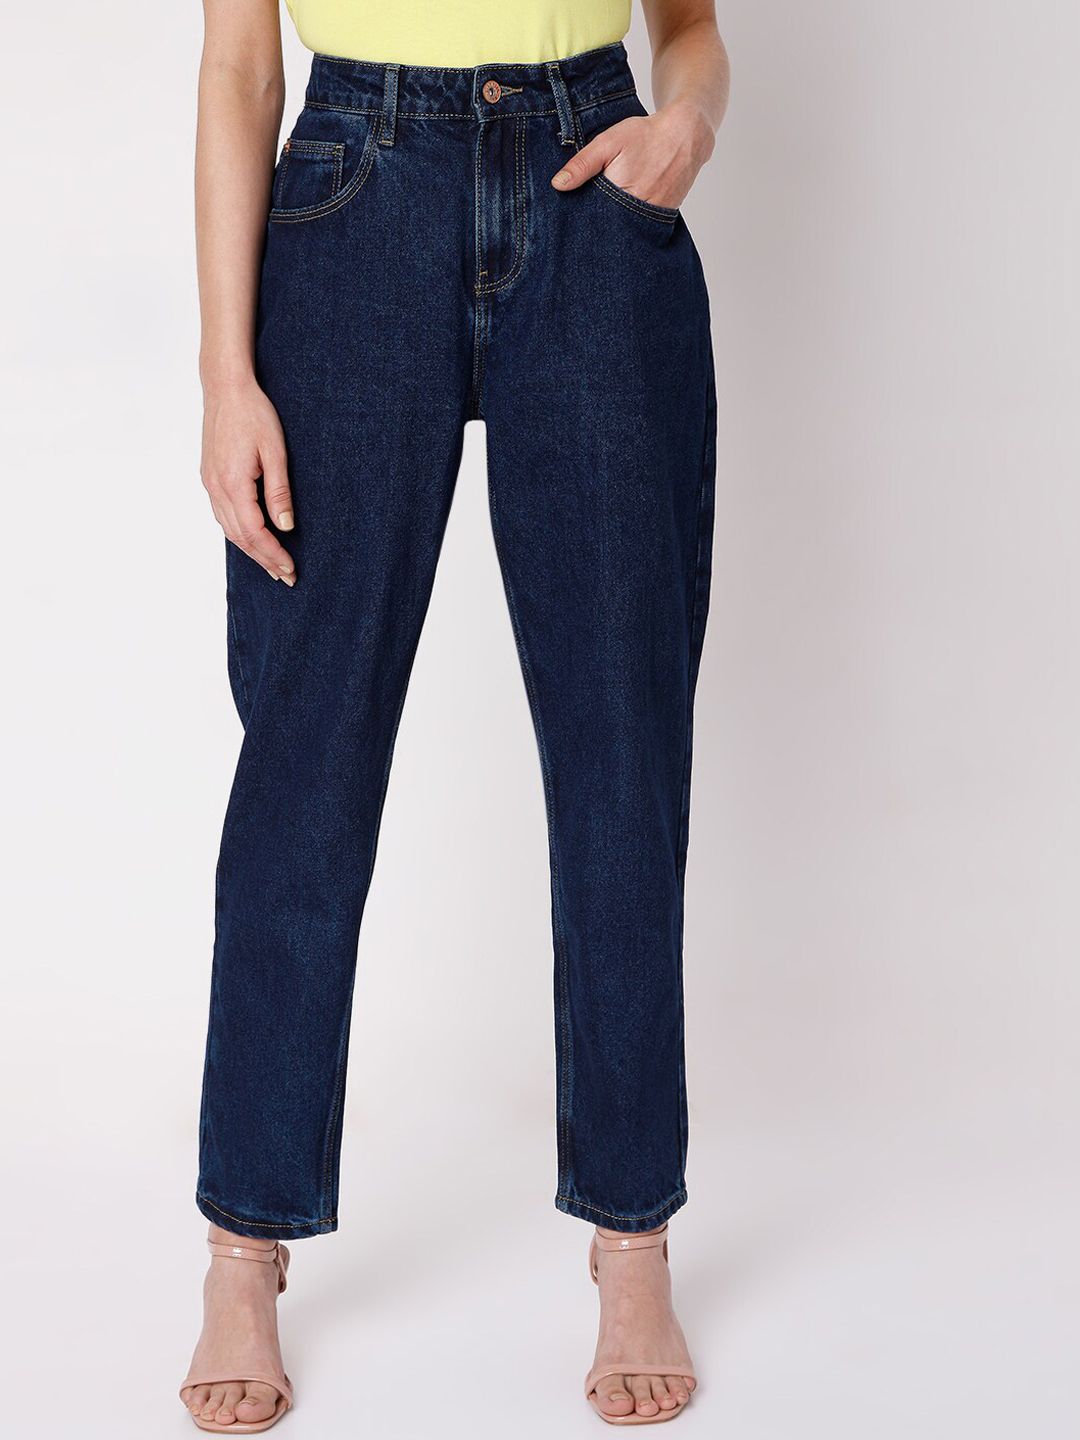 Vero Moda Women Blue Slim Fit High-Rise Cotton Jeans Price in India